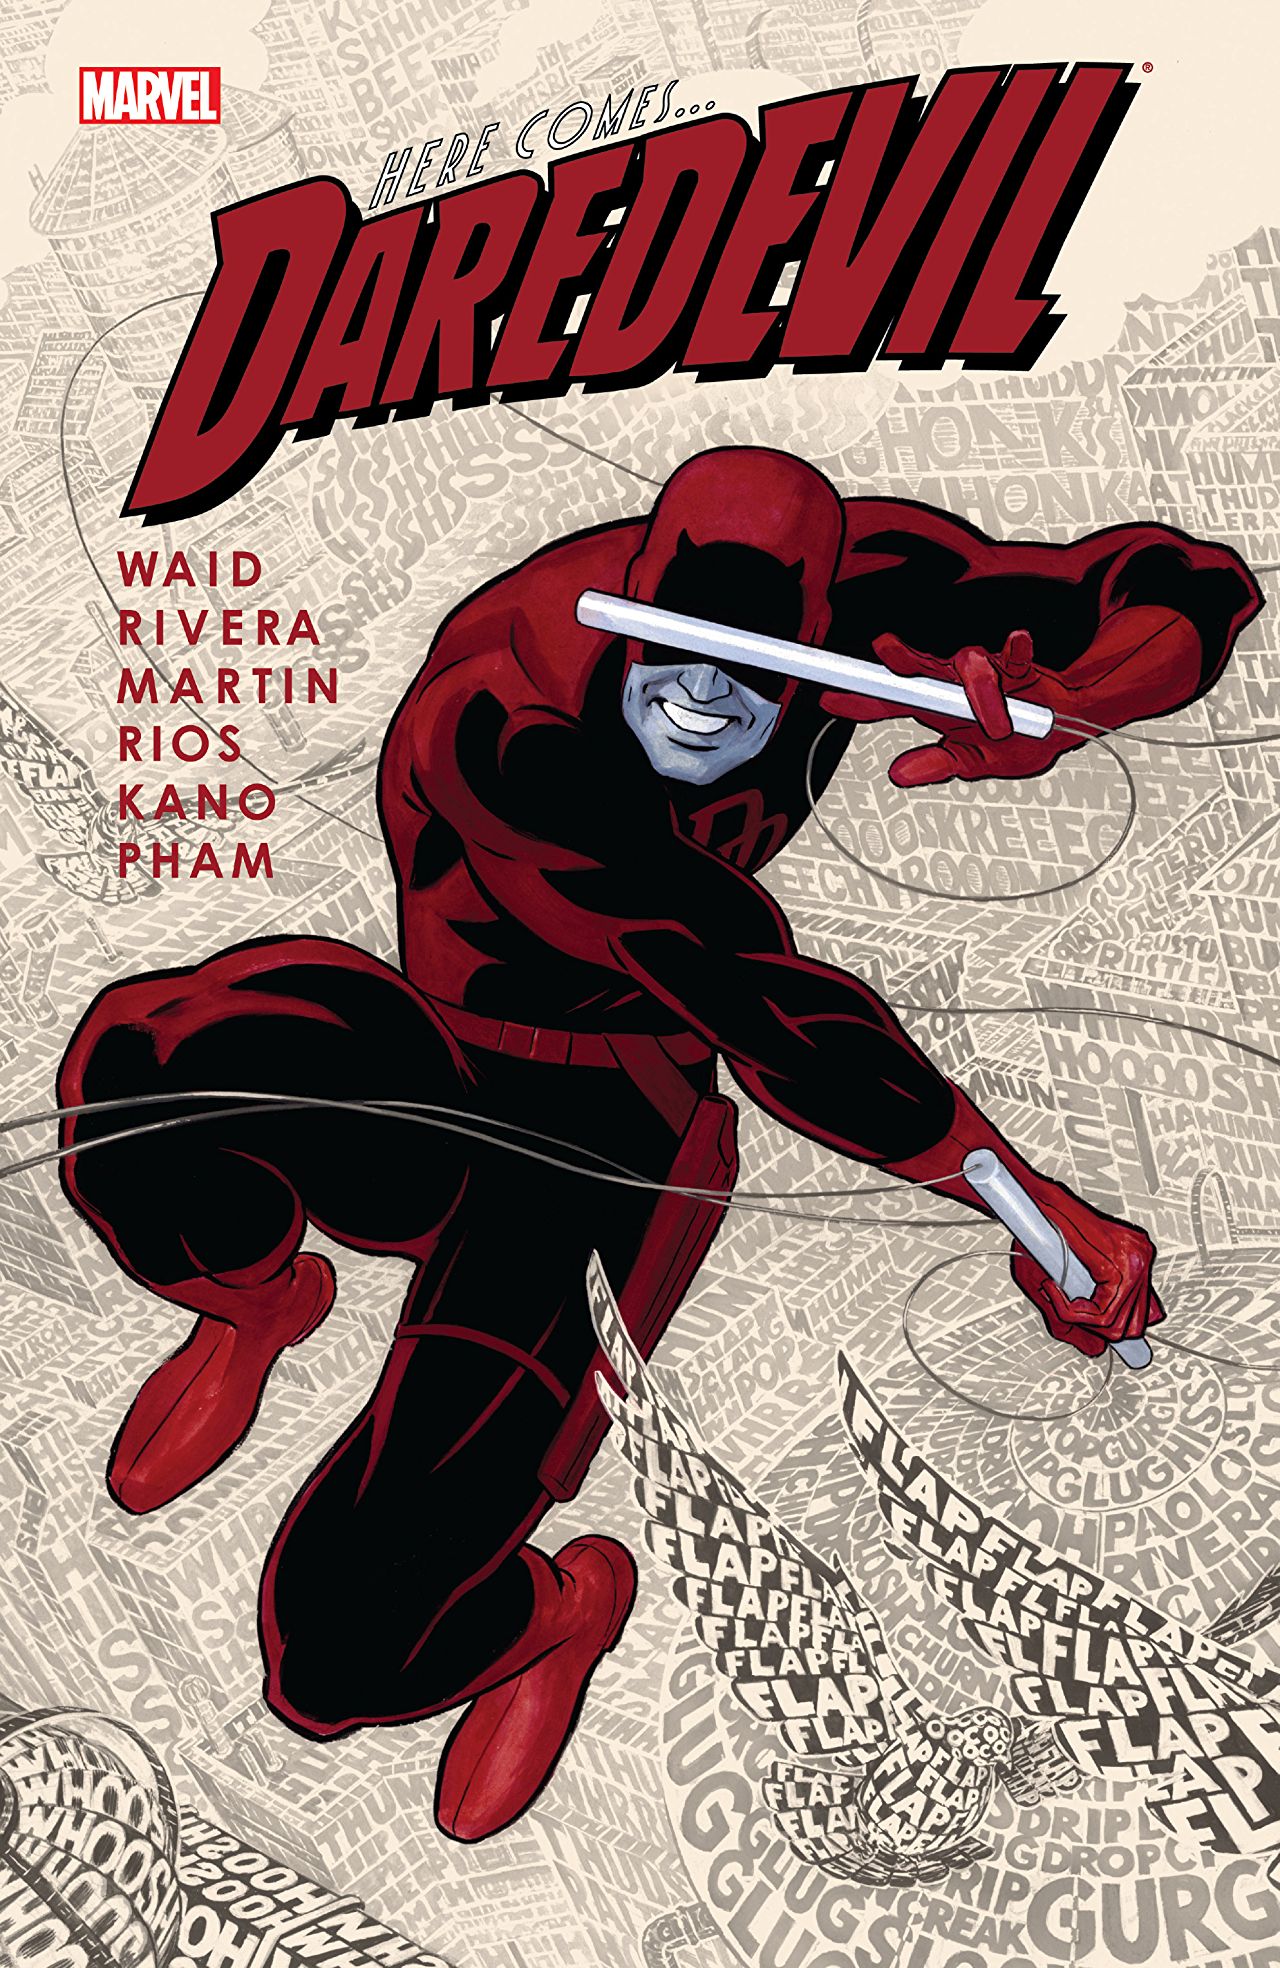 Daredevil by Mark Waid Hardcover Volume 1